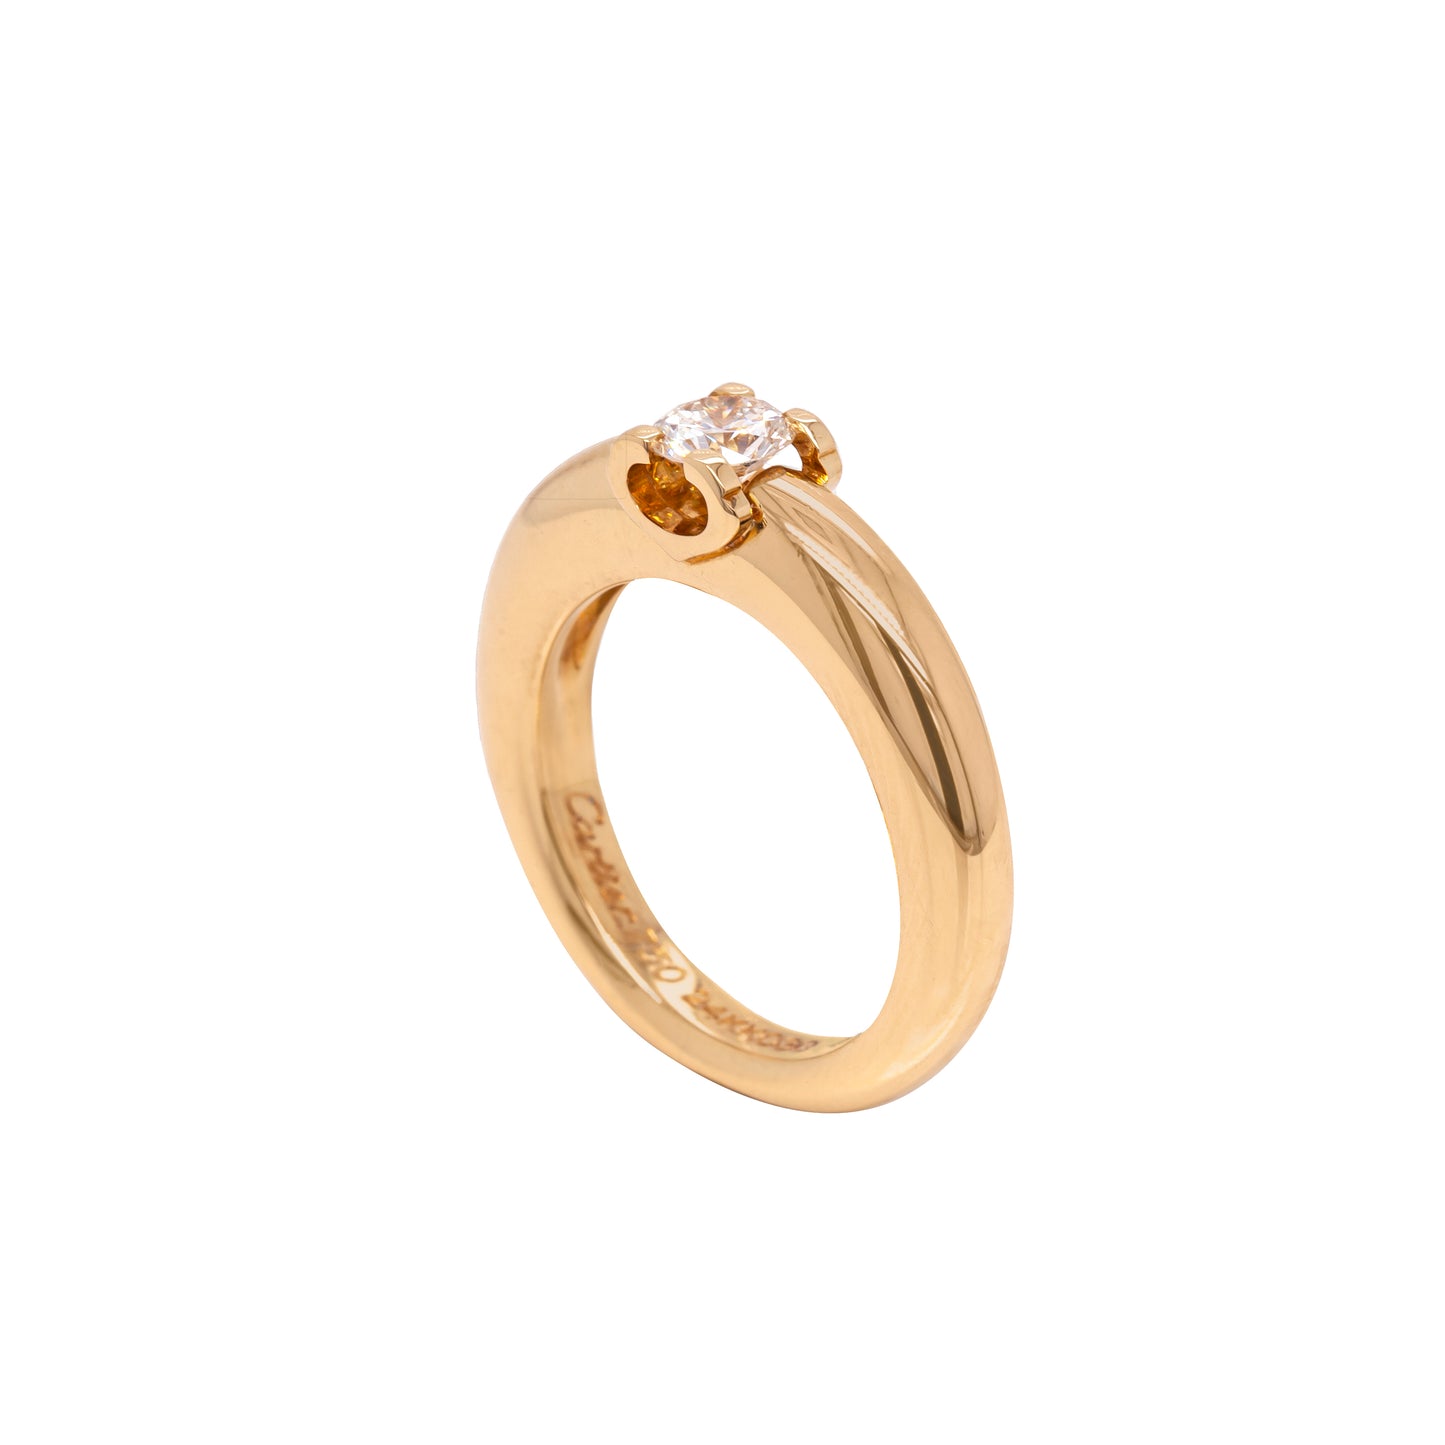 Cartier 'C de Cartier' 18 Carat Yellow Gold Diamond Solitaire Engagement Ring